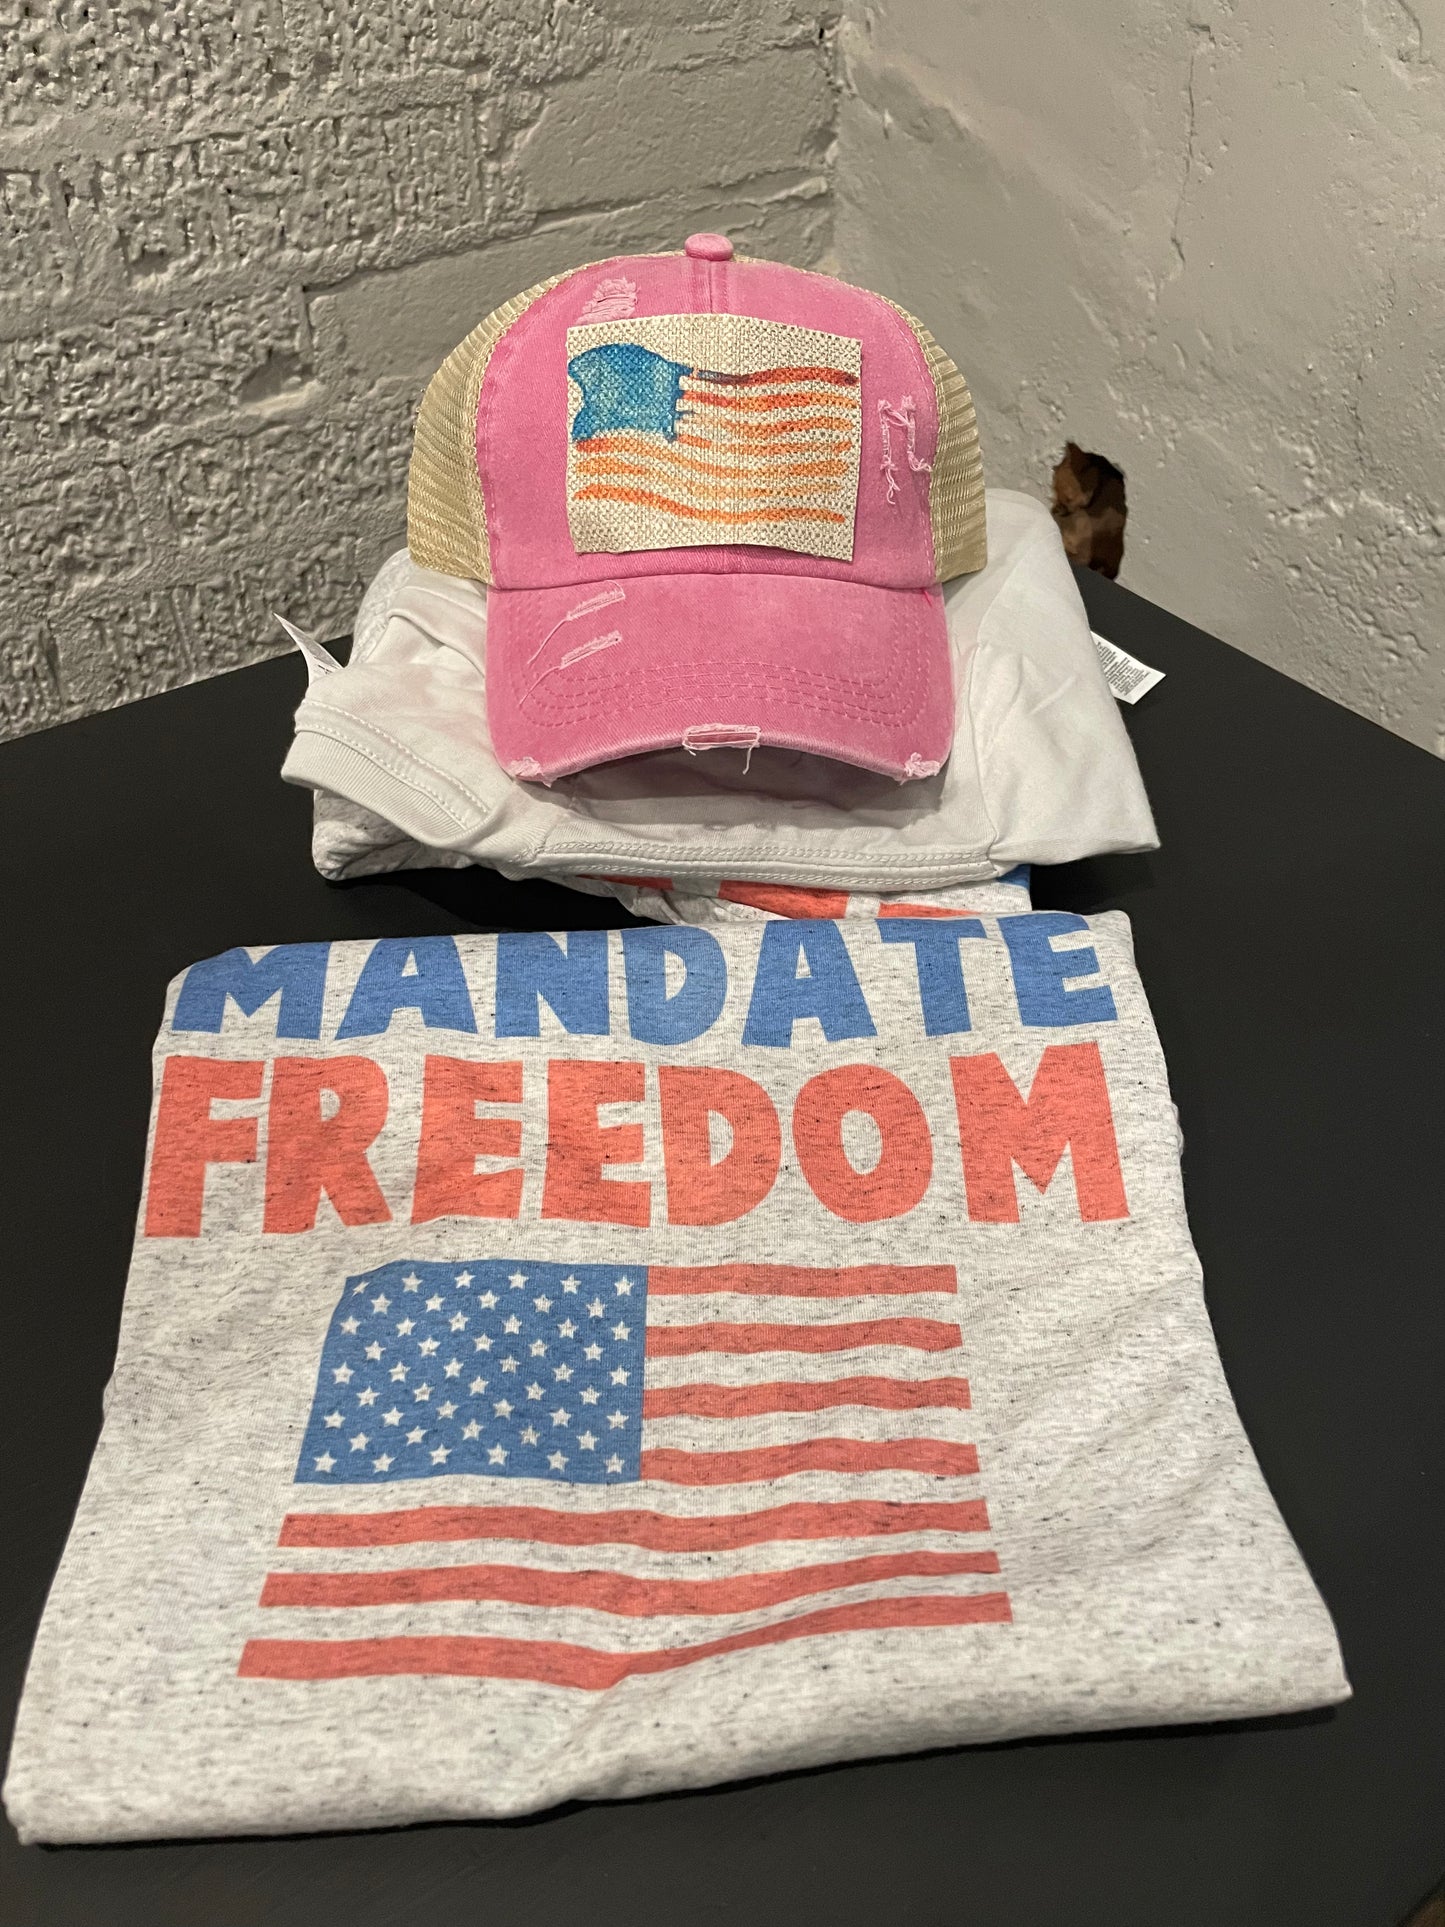 Mandate Freedom Teeshirt